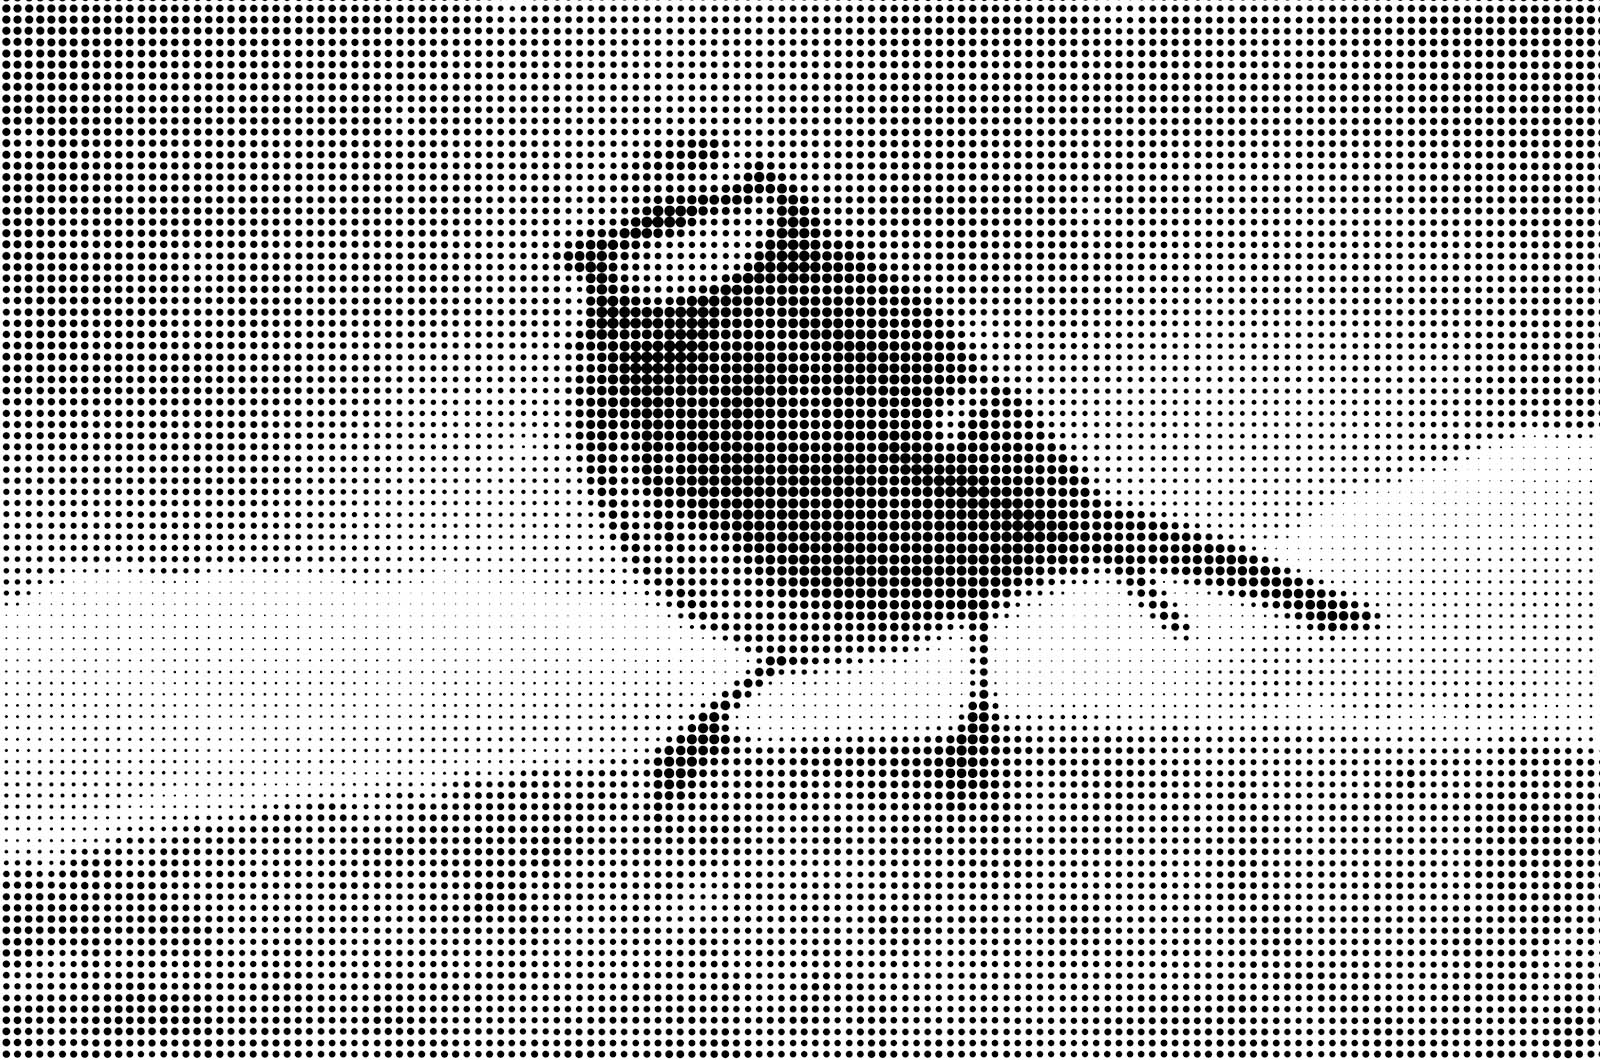 Black and white halftone image of a bluetit